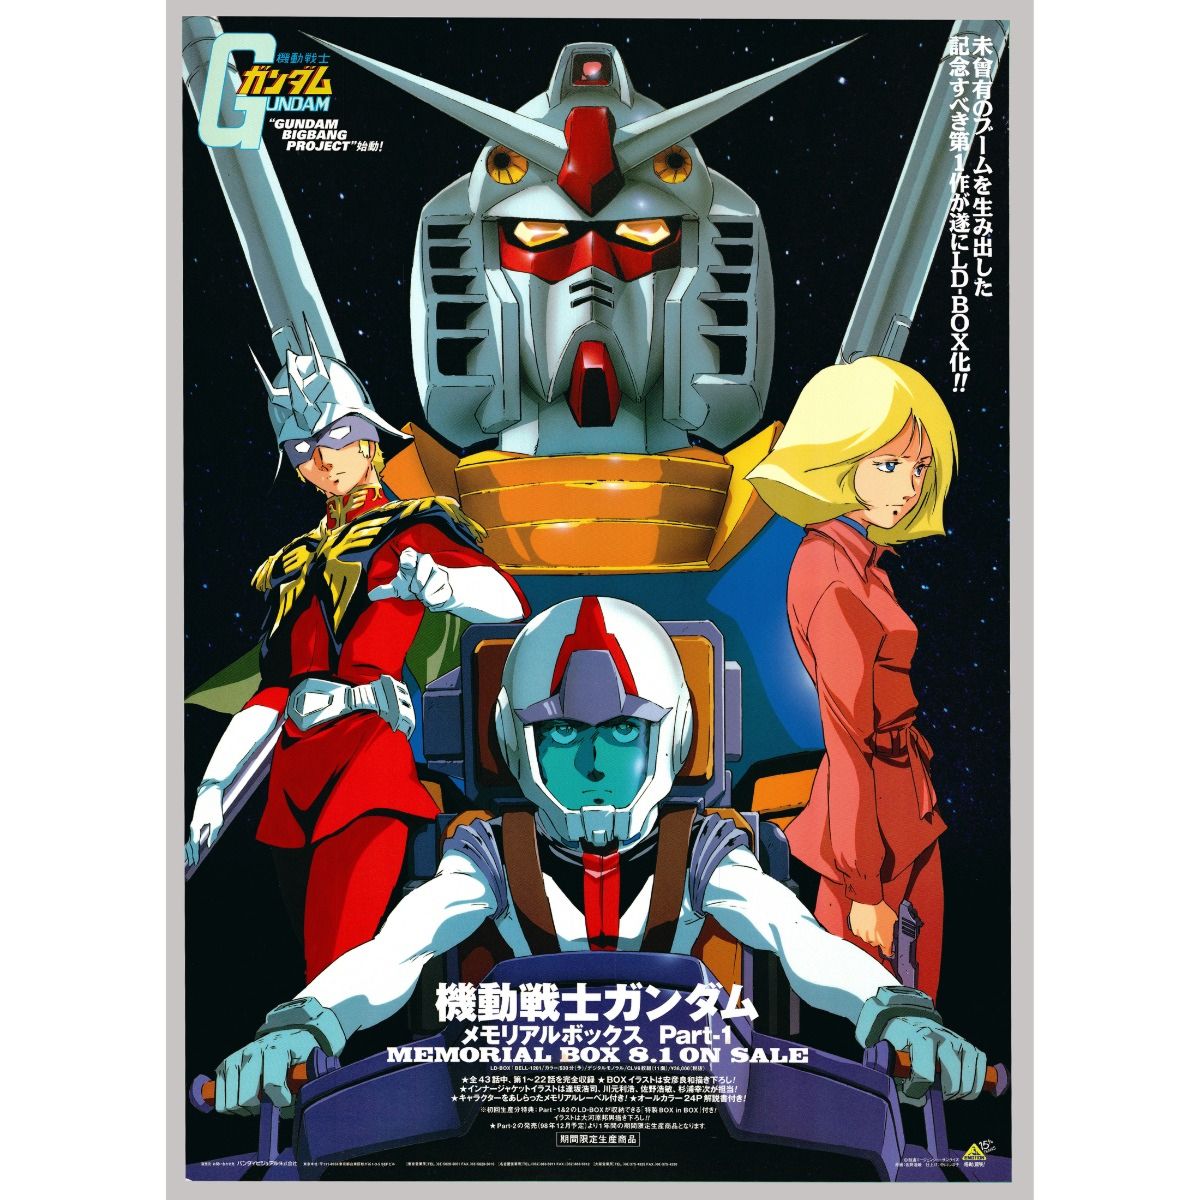 Buy Original Mobile Suit Gundam Anime Poster Online